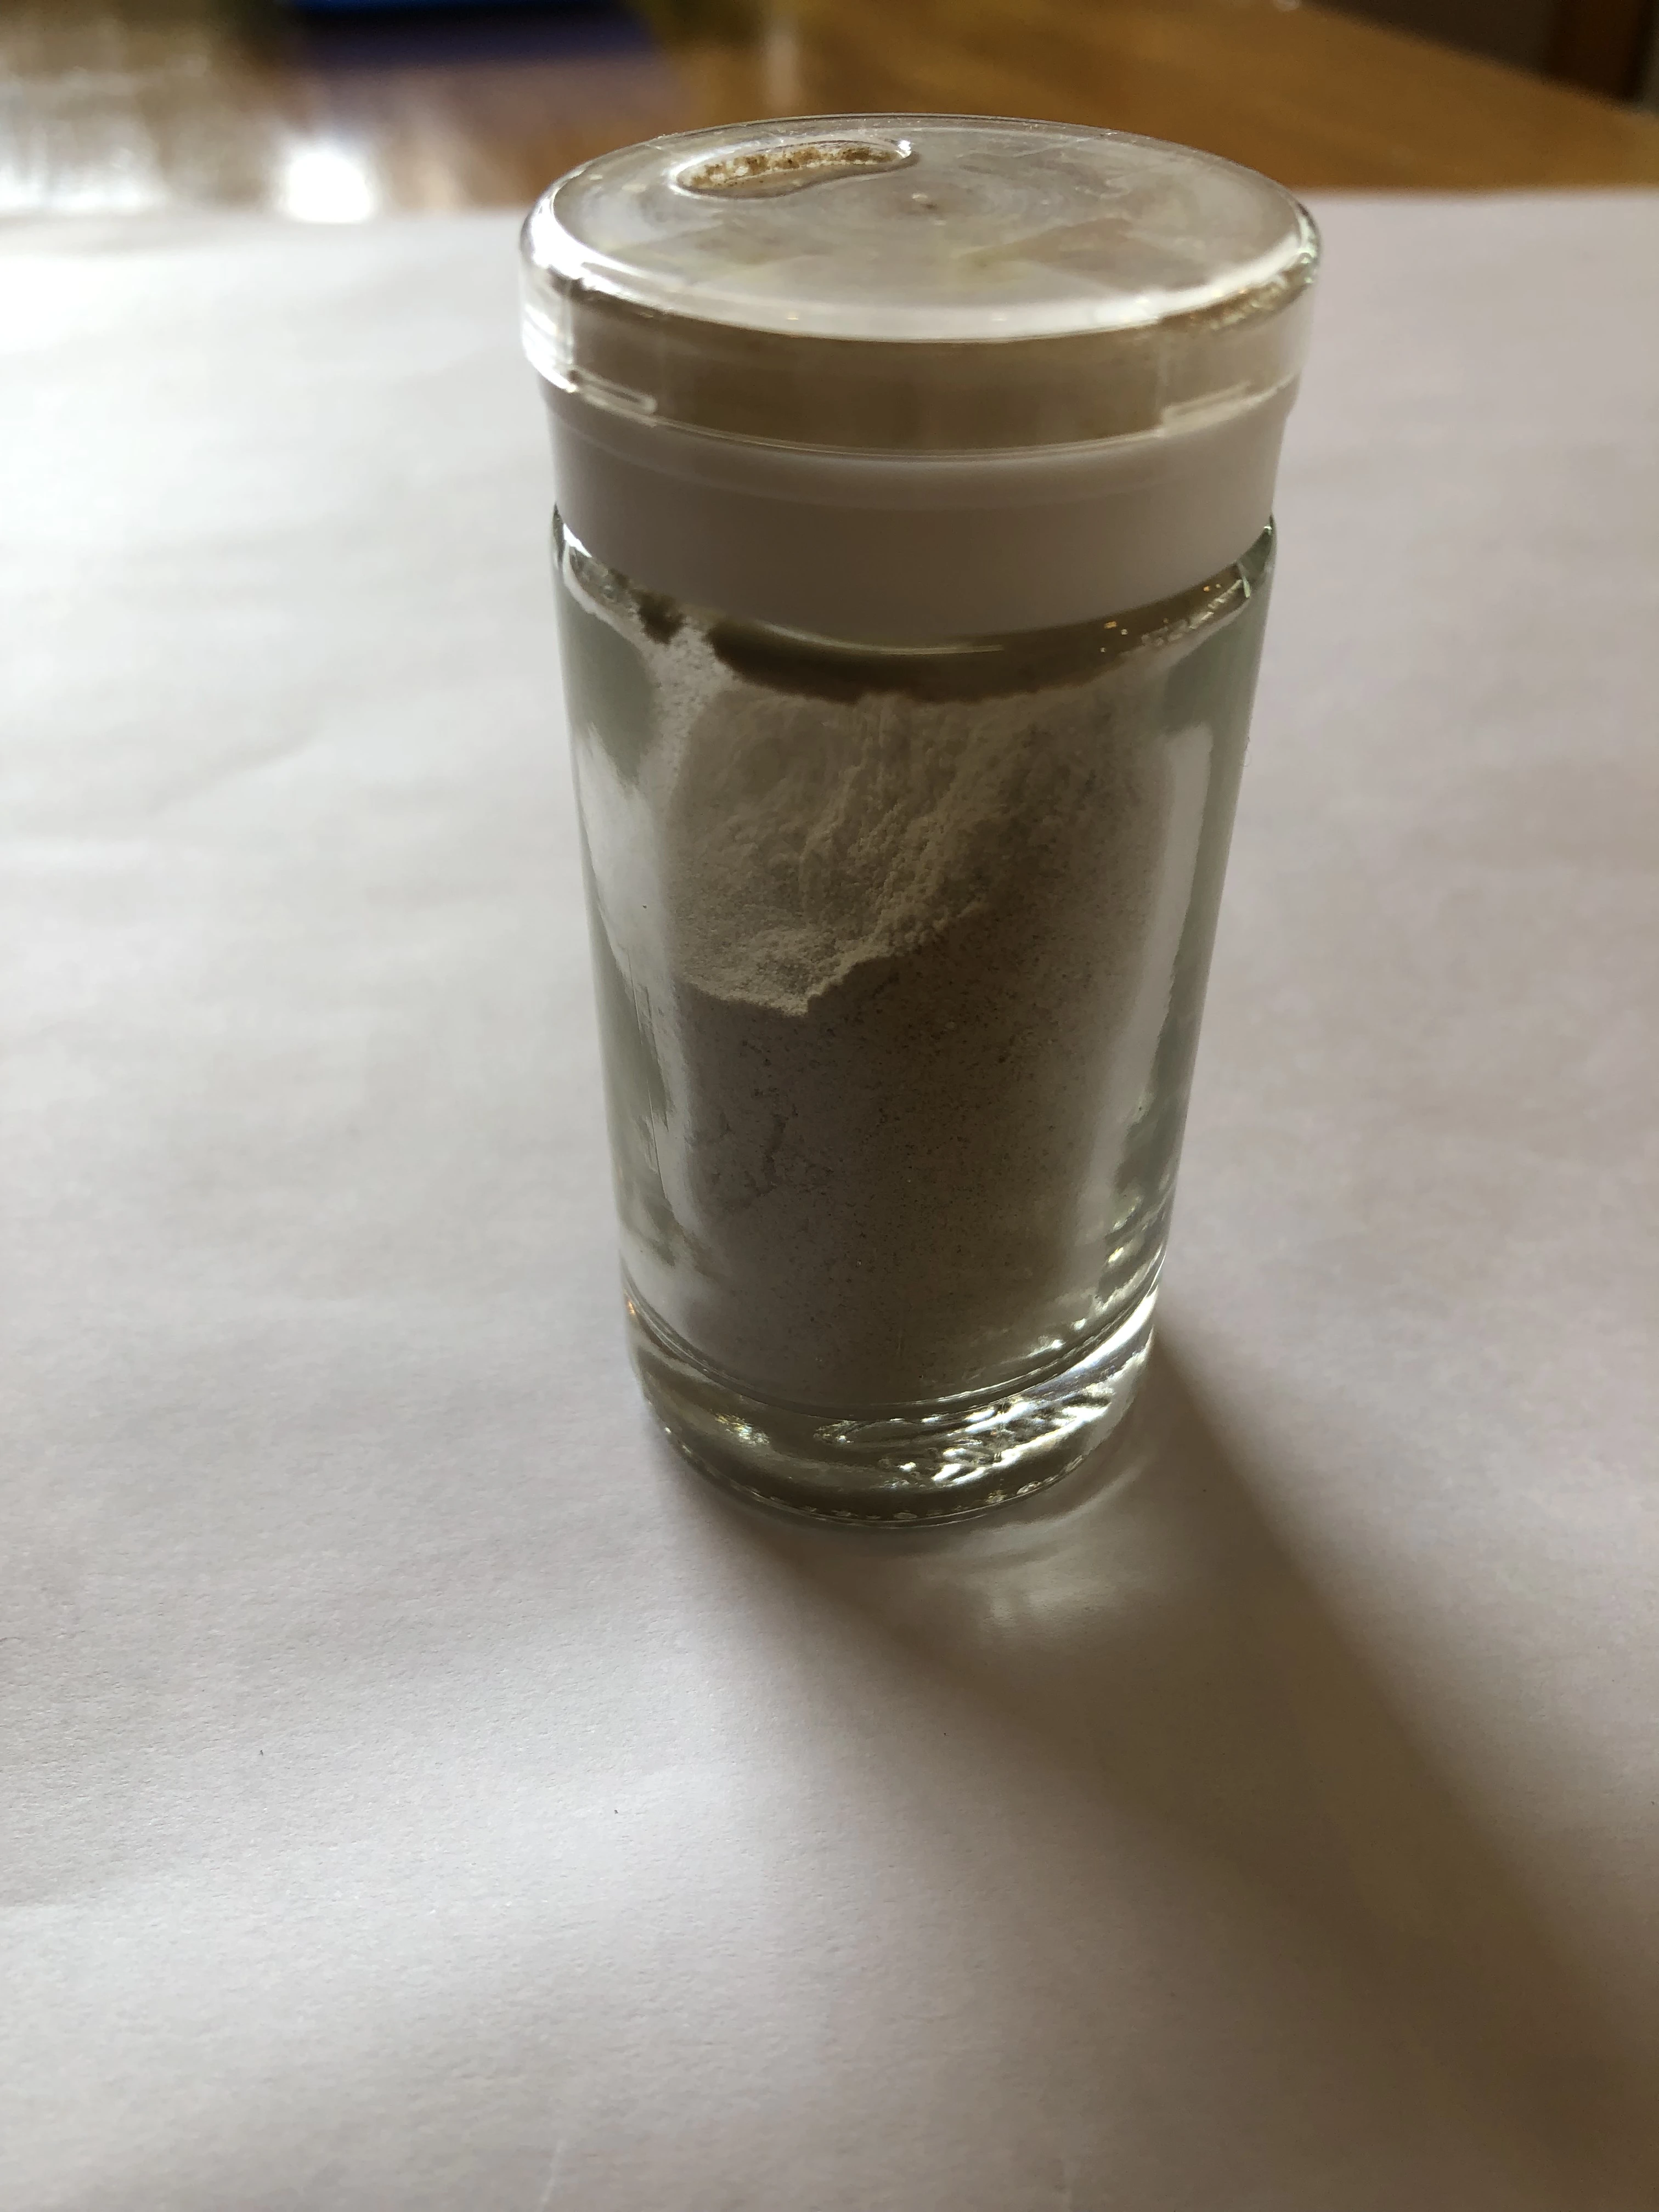 Savory Shiitake Powder Baked Single spices self adhere for longevity secret